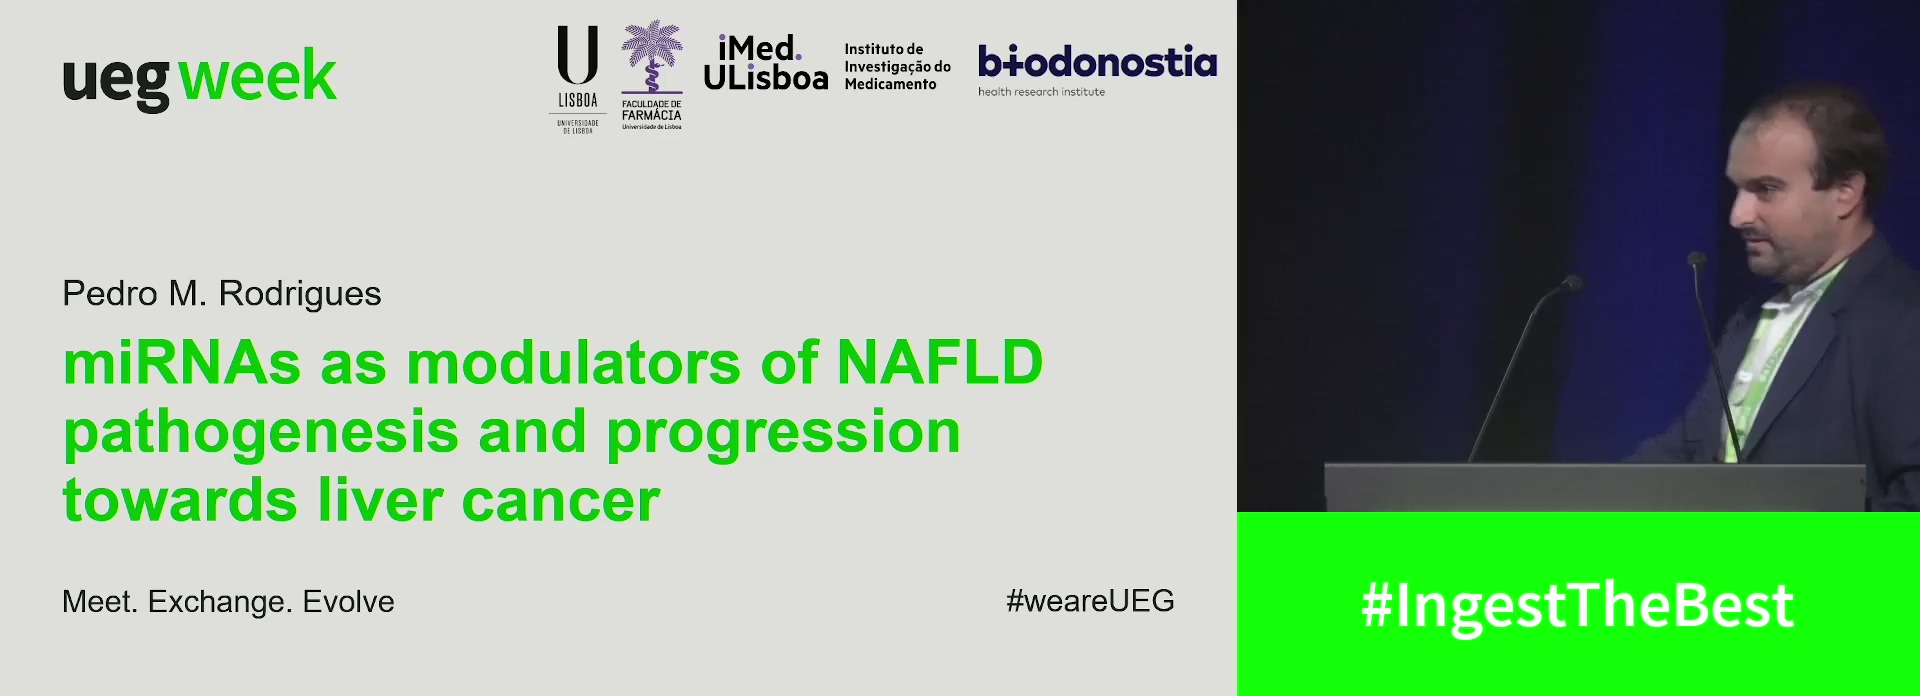 miRNAs as modulators of NAFLD pathogenesis and progression towards liver cancer